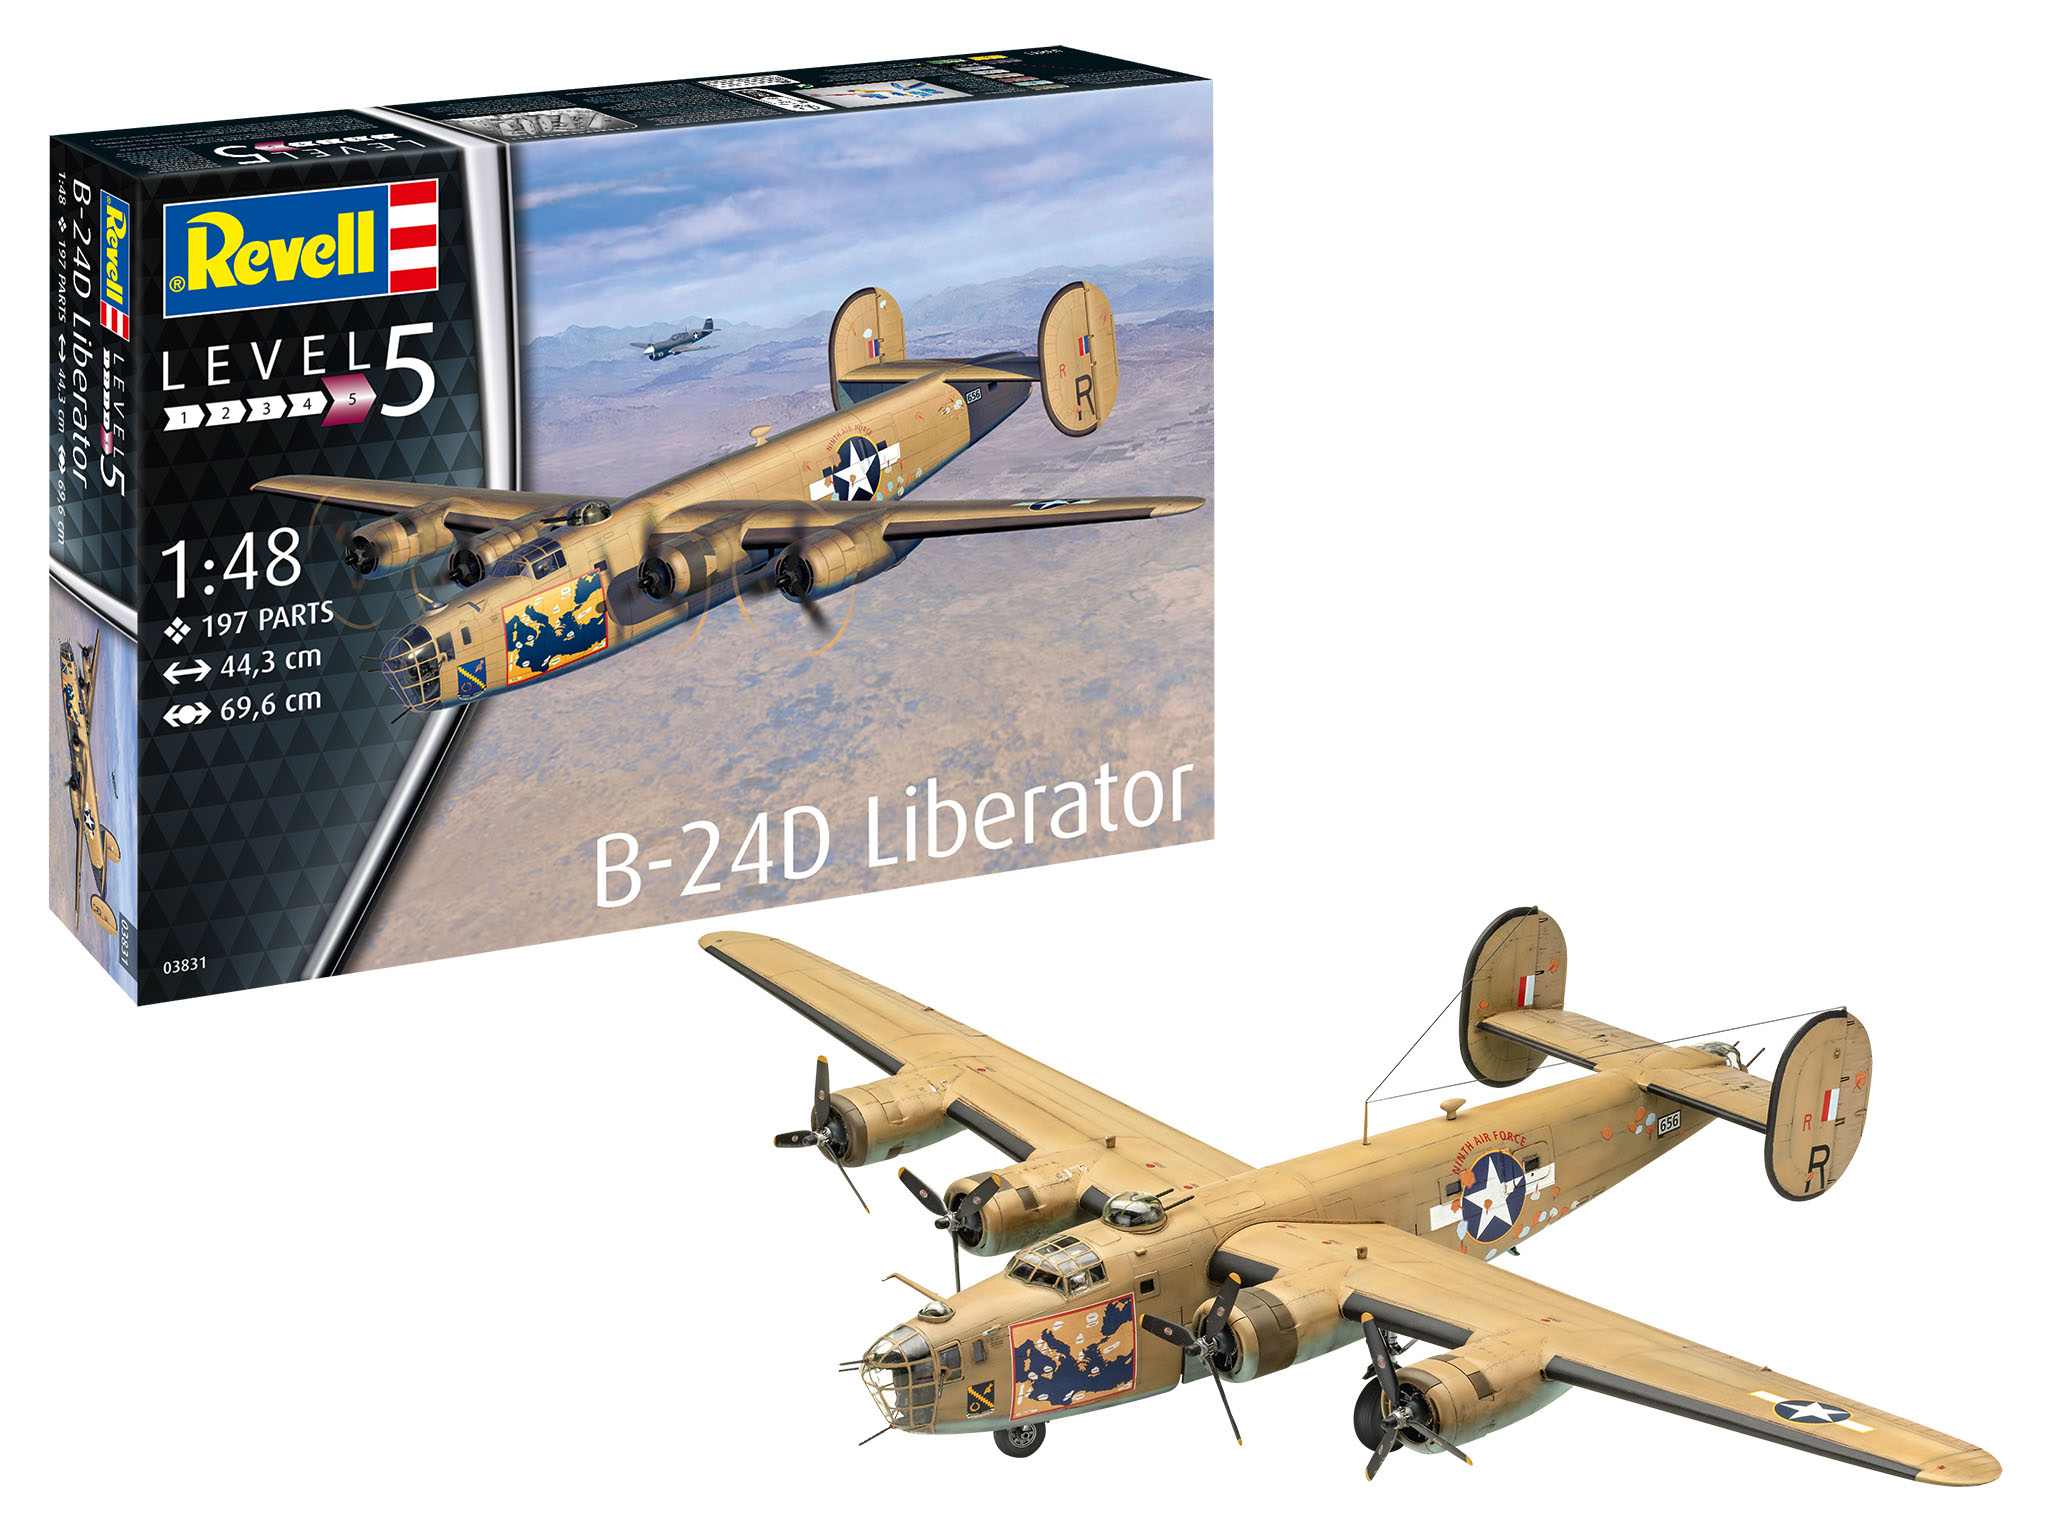 Modellbausatz, 03831 Liberator REVELL Mehrfarbig B-24D